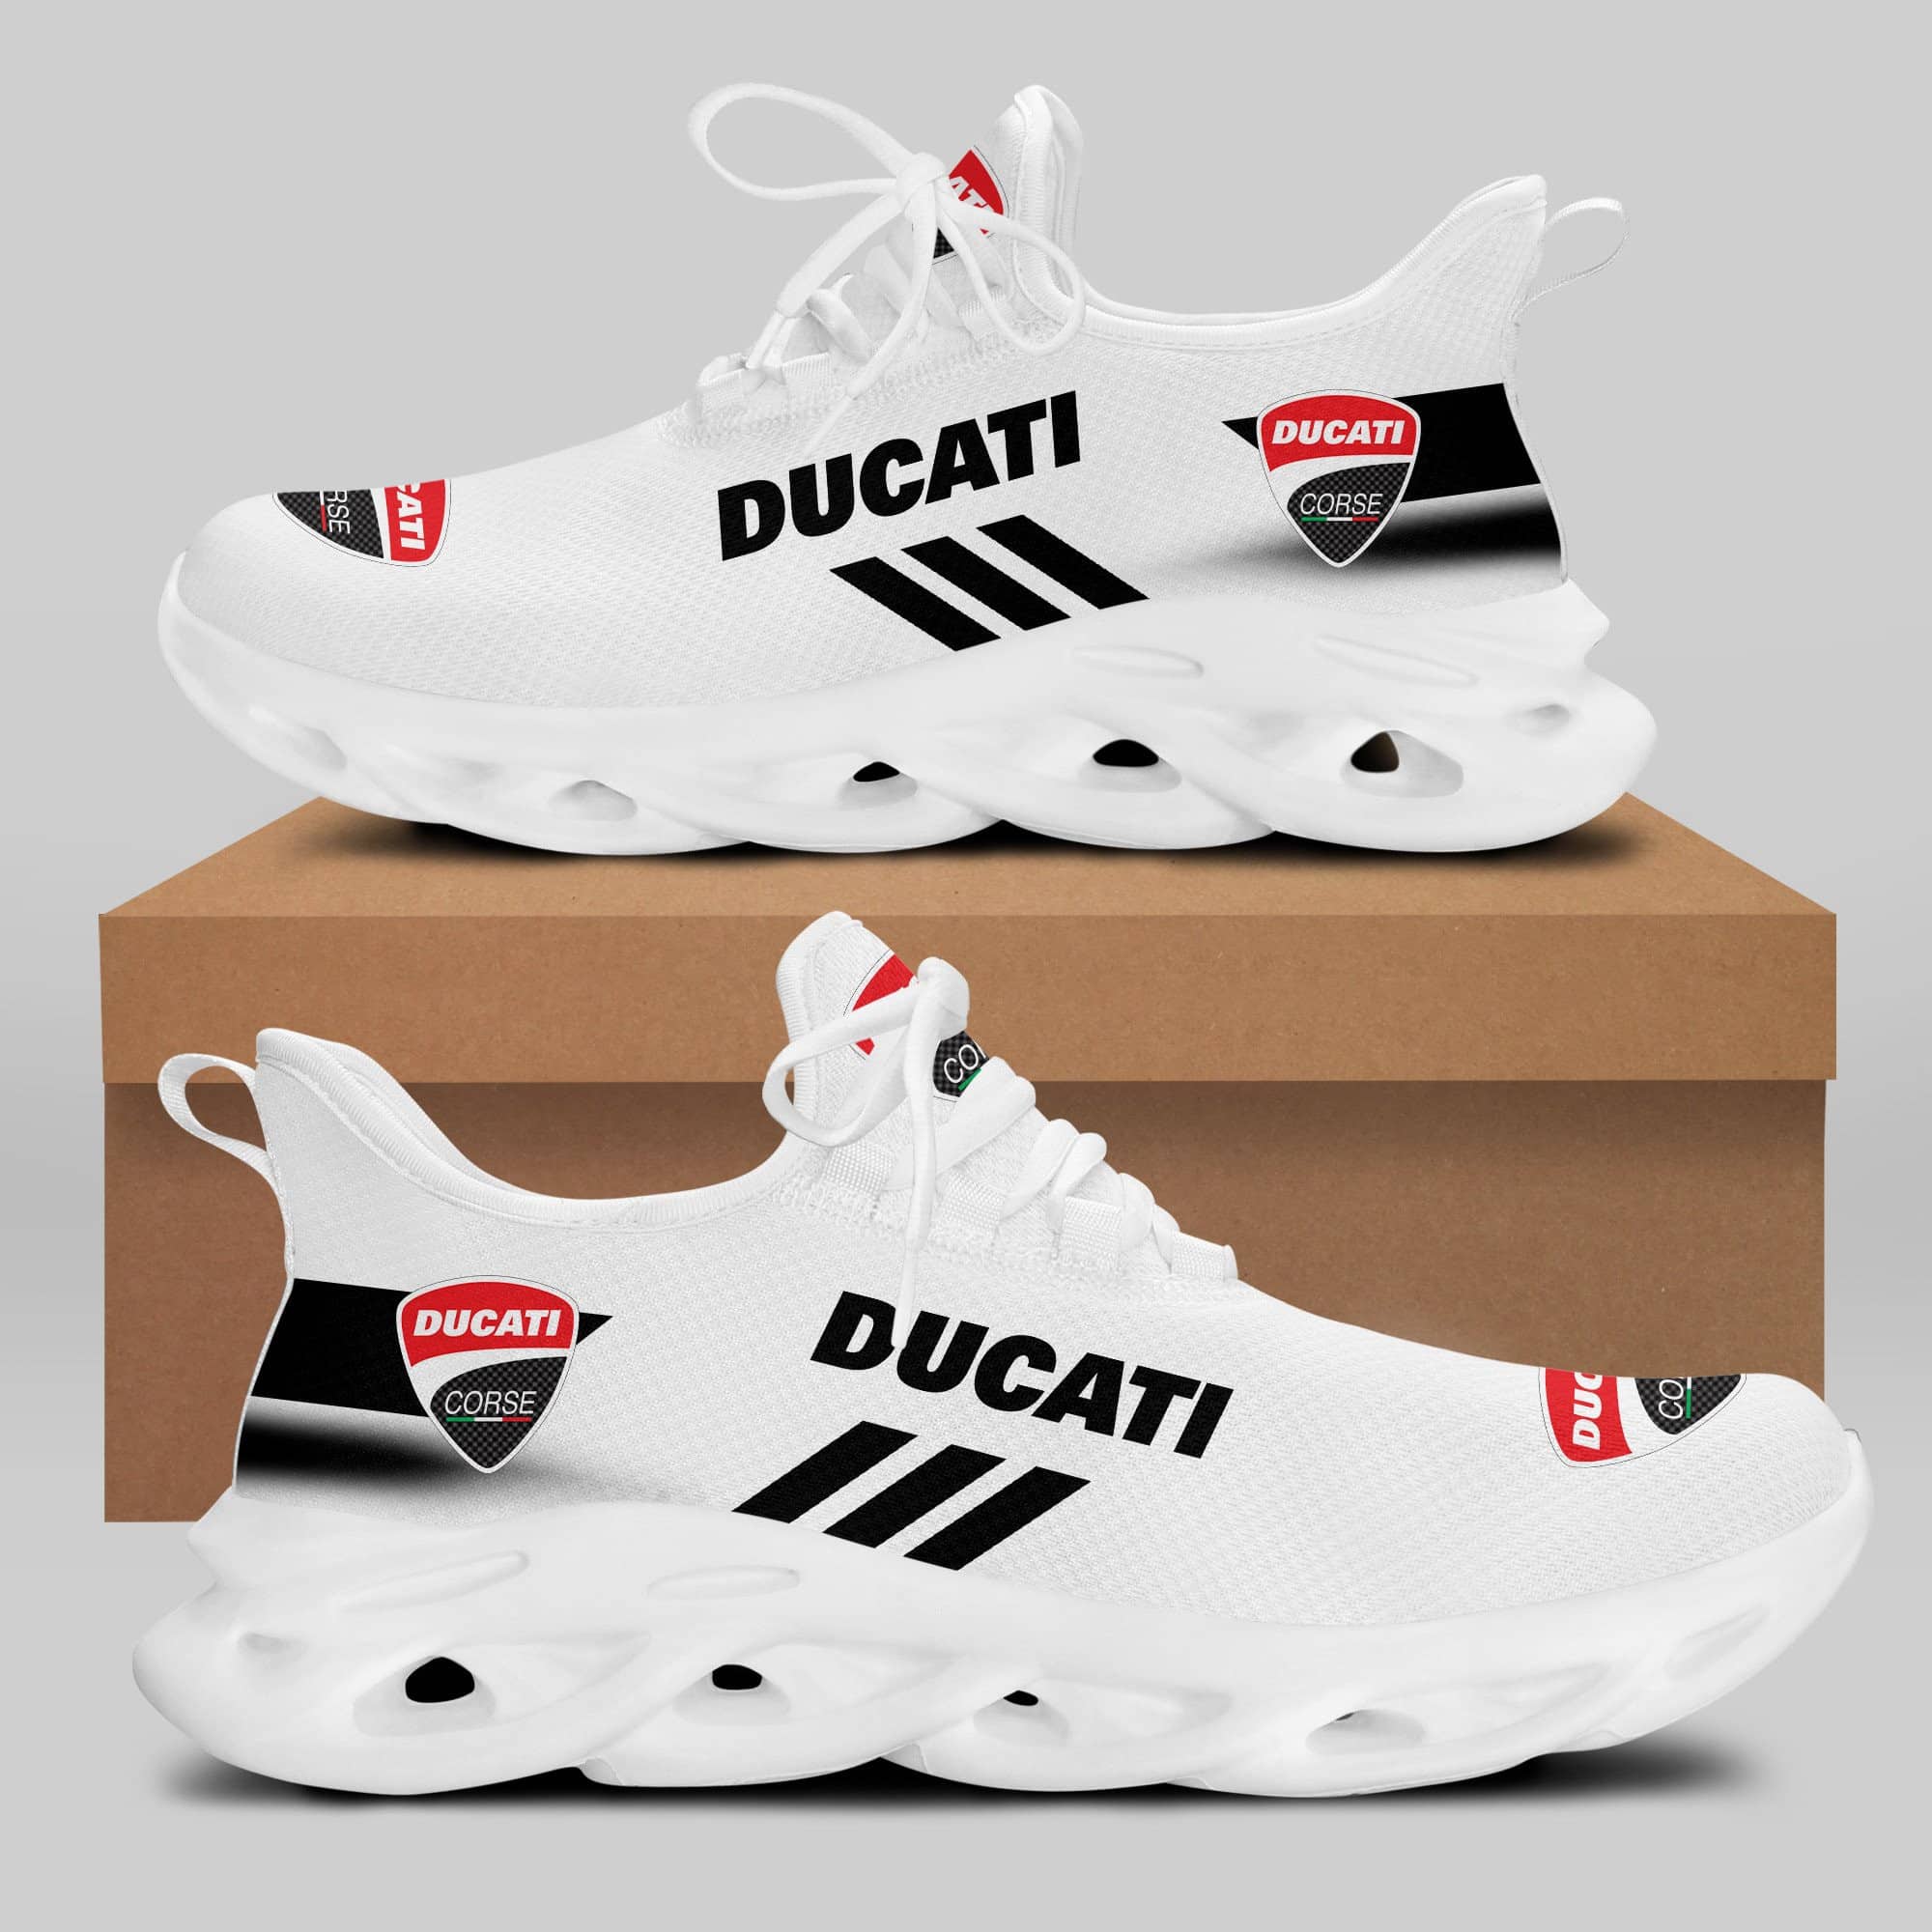 Ducati Racing Running Shoes Max Soul Shoes Sneakers Ver 27 1